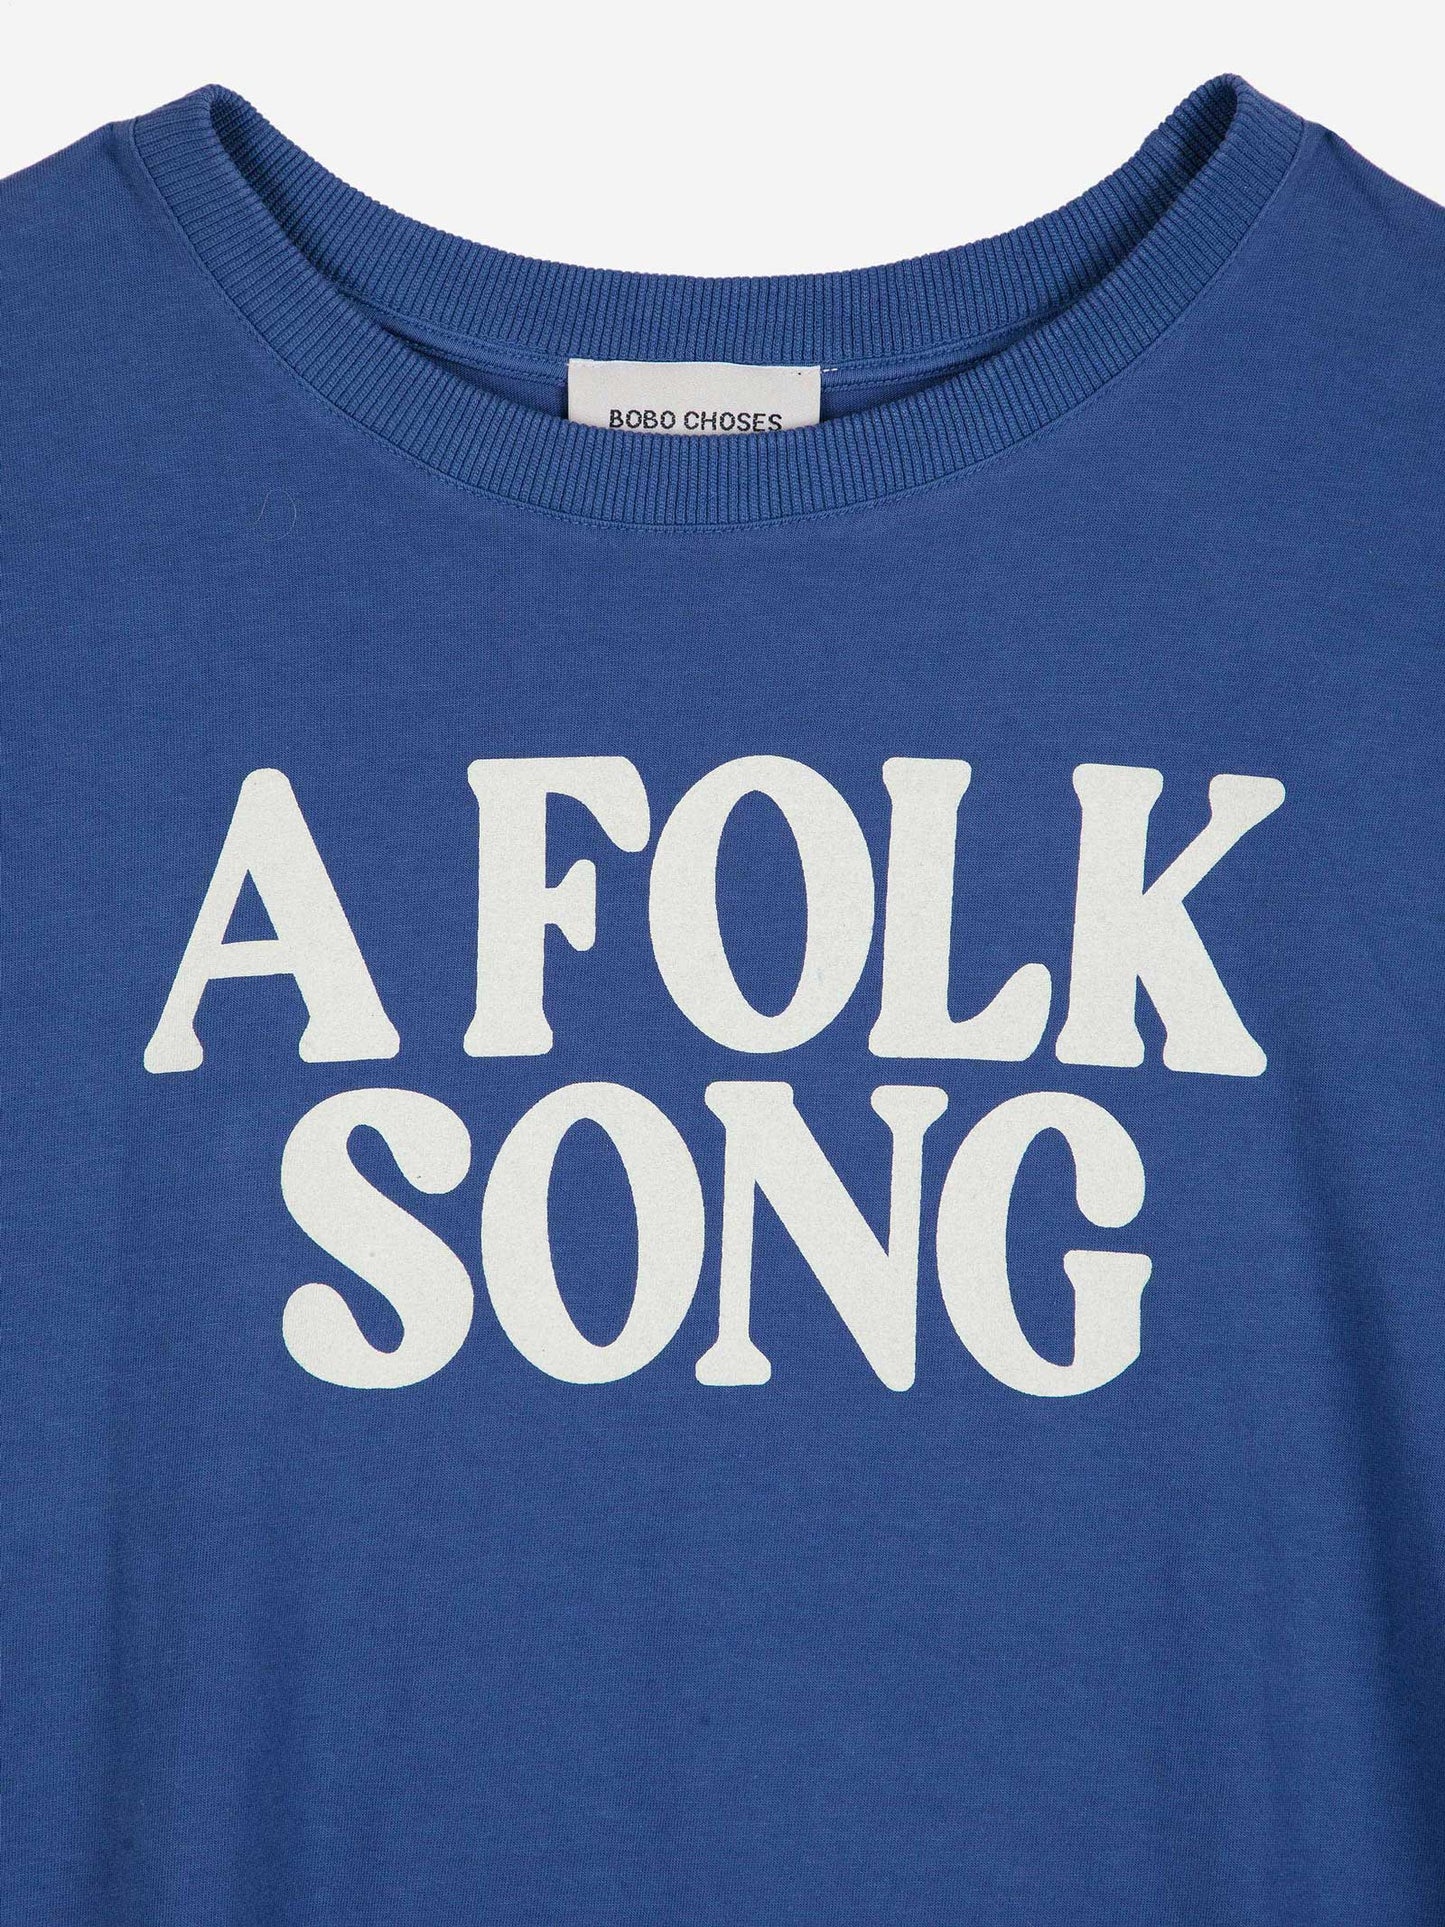 Camiseta A Folk Song